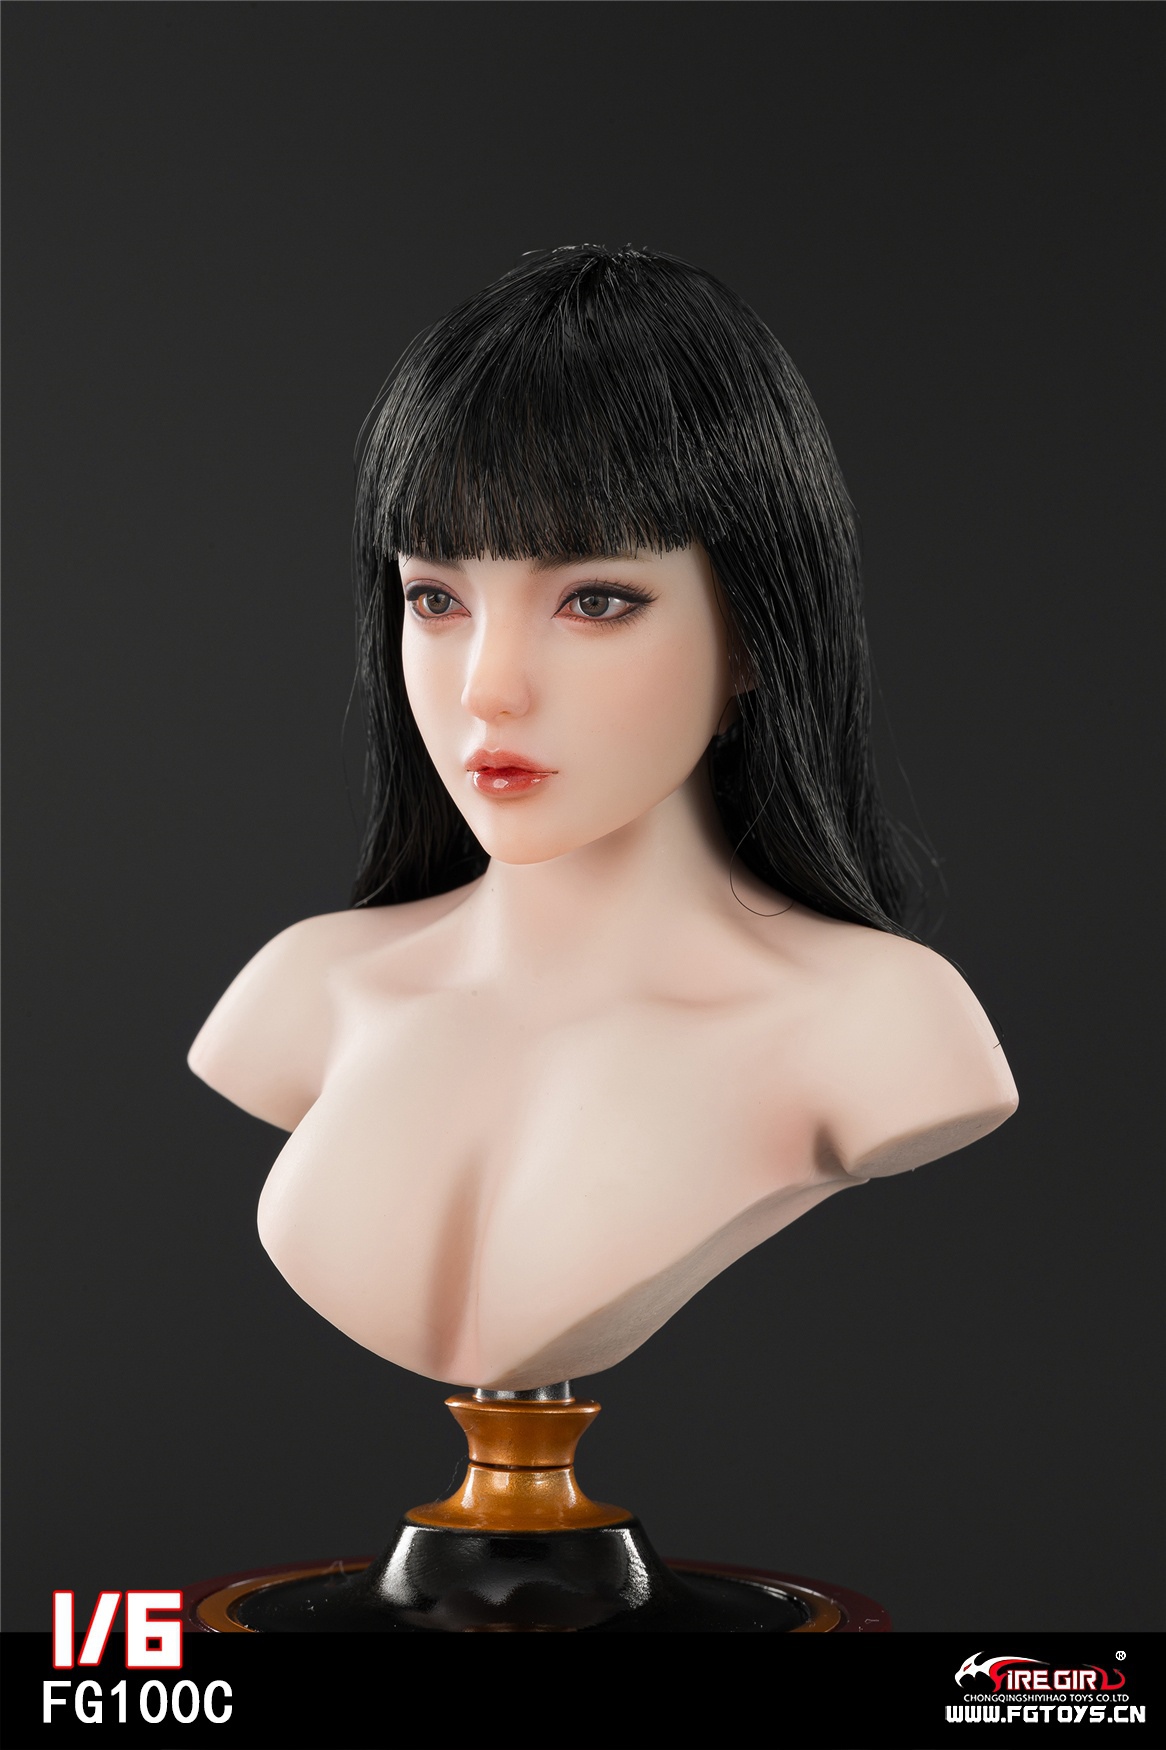 headsculpt - NEW PRODUCT: Fire Girl Toys: Western Girl-Aisha [movable eyes, ABC three hairstyles] (#FG100)  5013